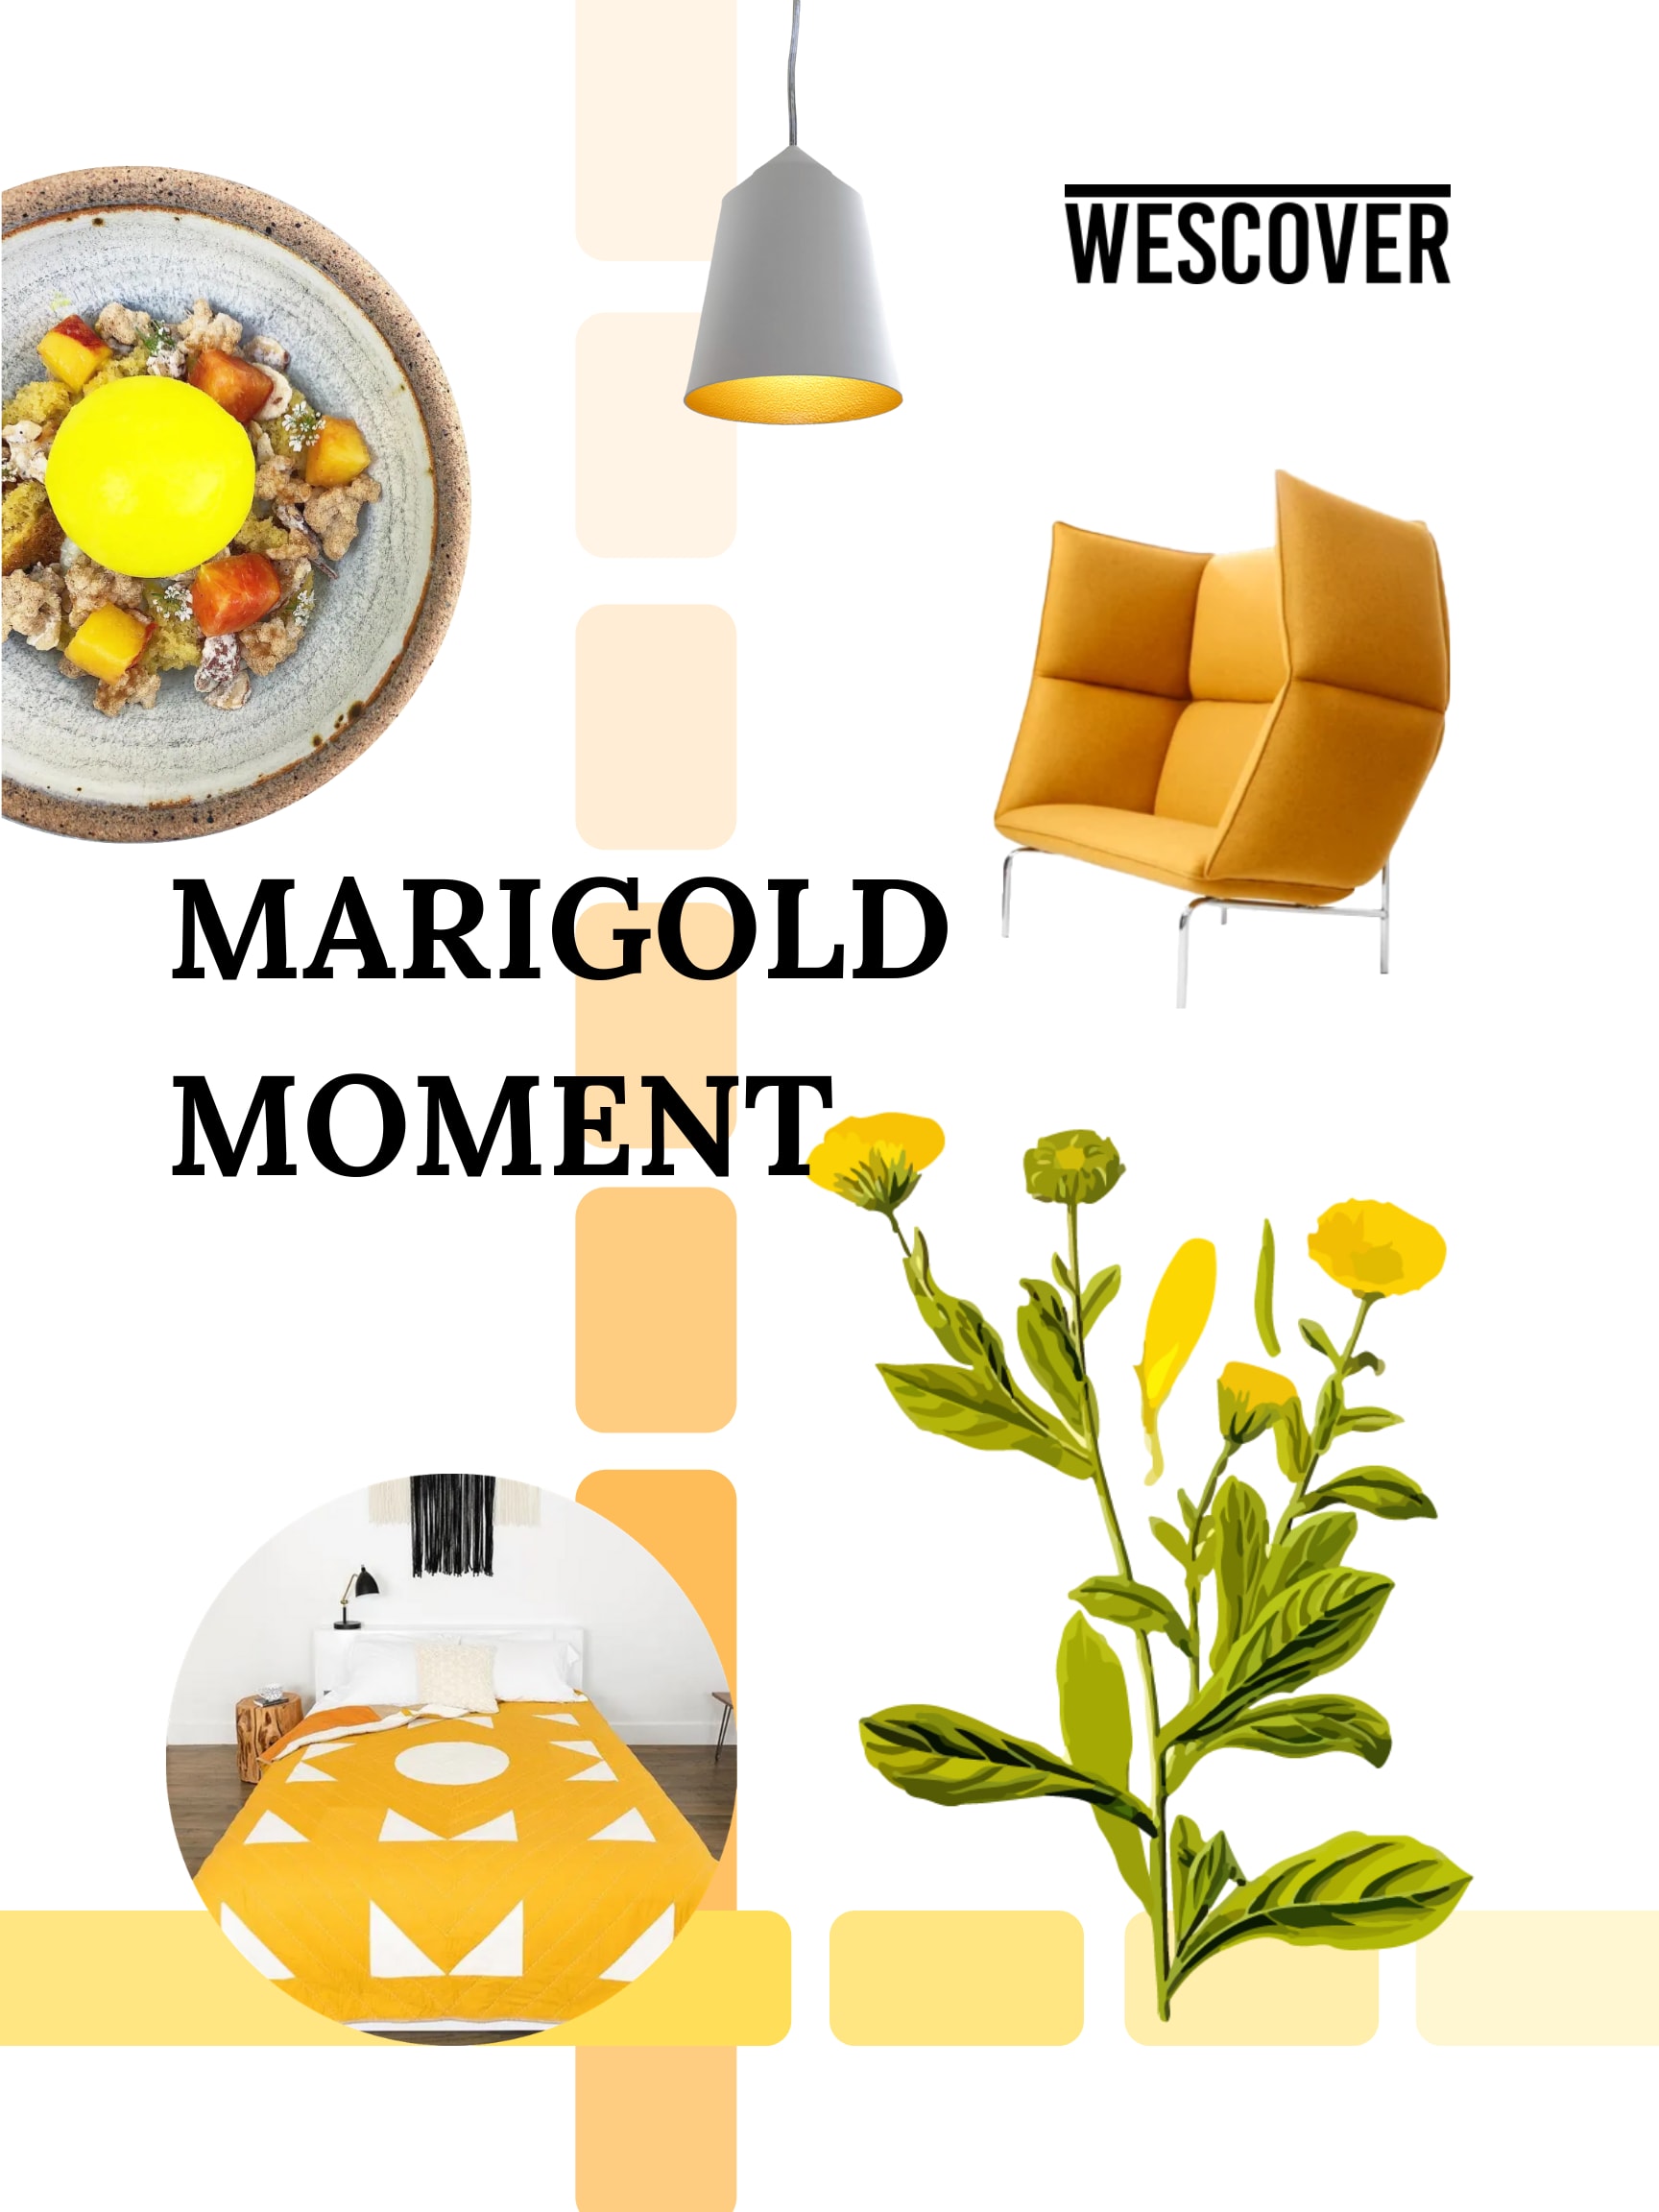 Marigold Moment